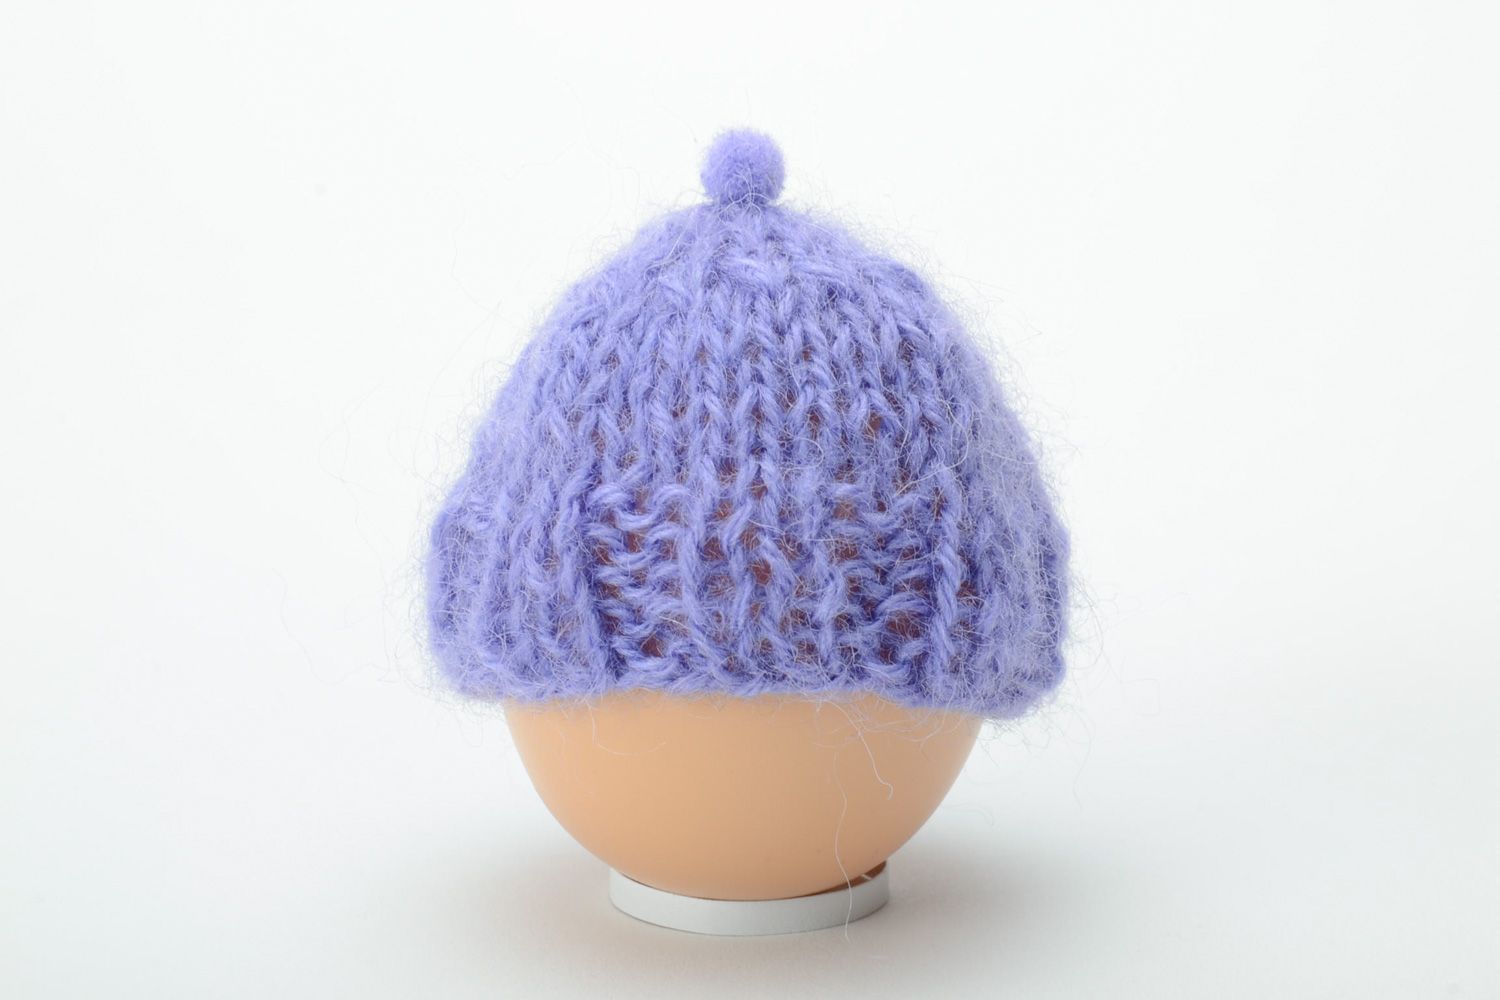 Homemade knitted Easter egg cozy photo 2